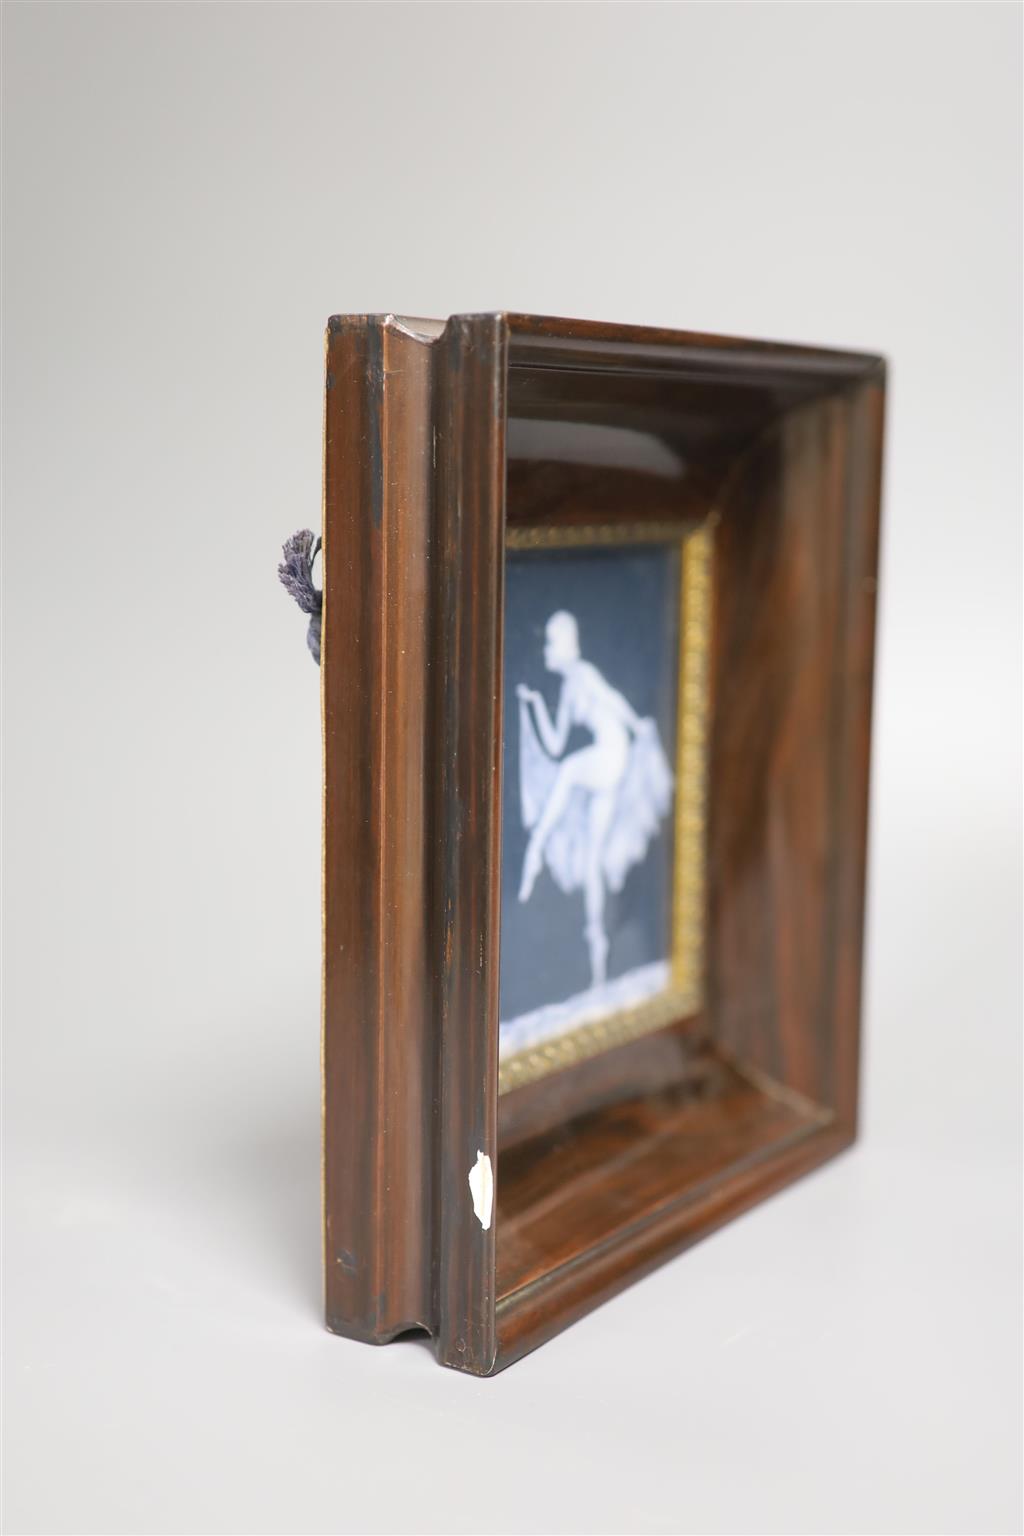 A 19th century Limoges pate sur pate plaque of a nude dancer, signed Leduc, 24 x 21cm including frame